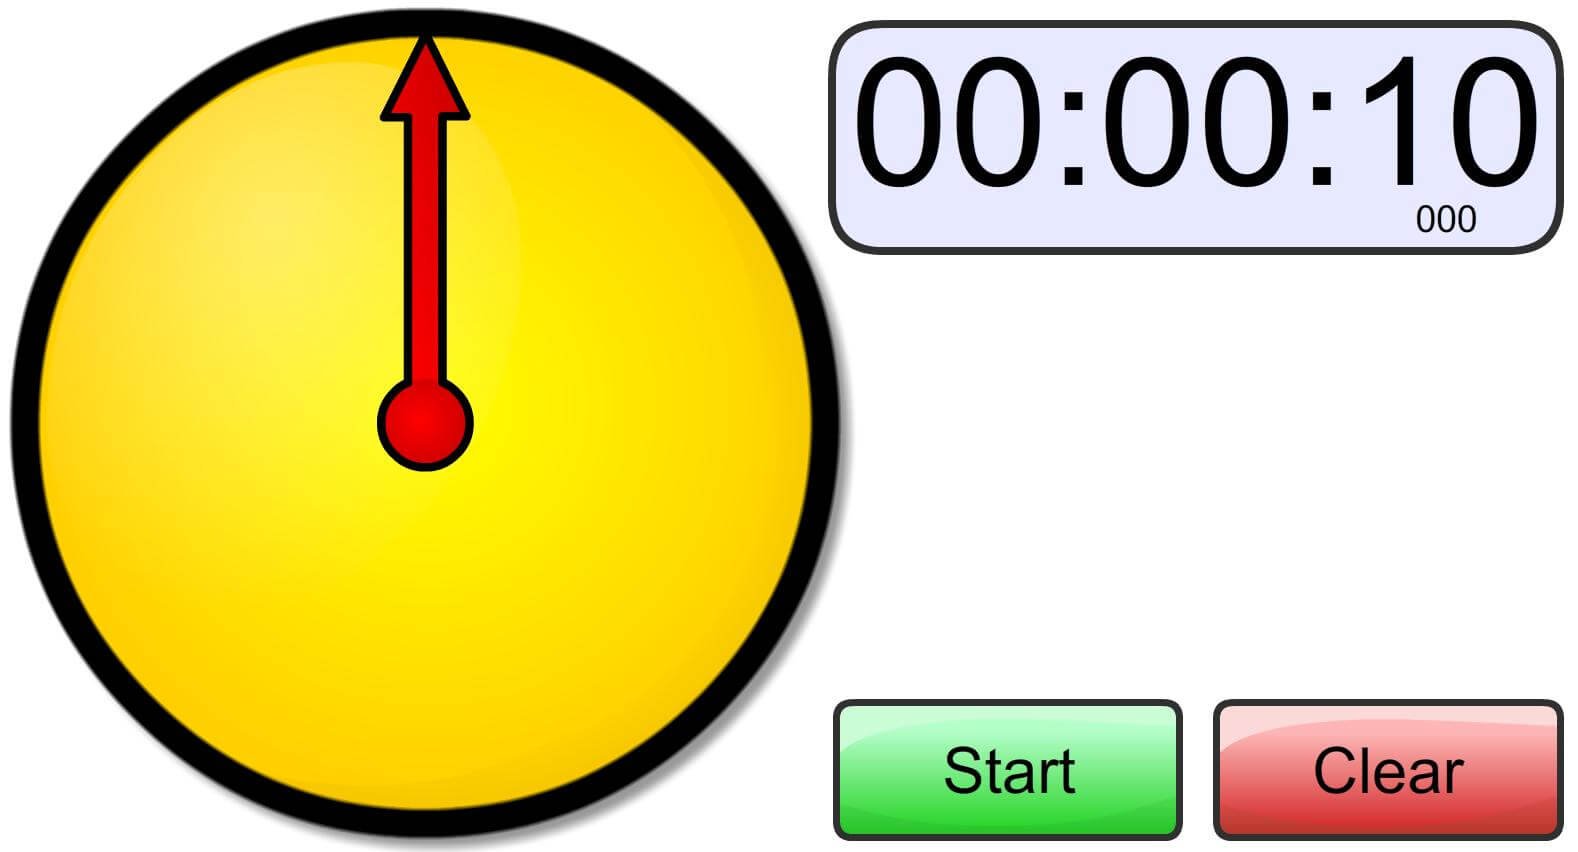 set timer for 1 hour 35 minutes